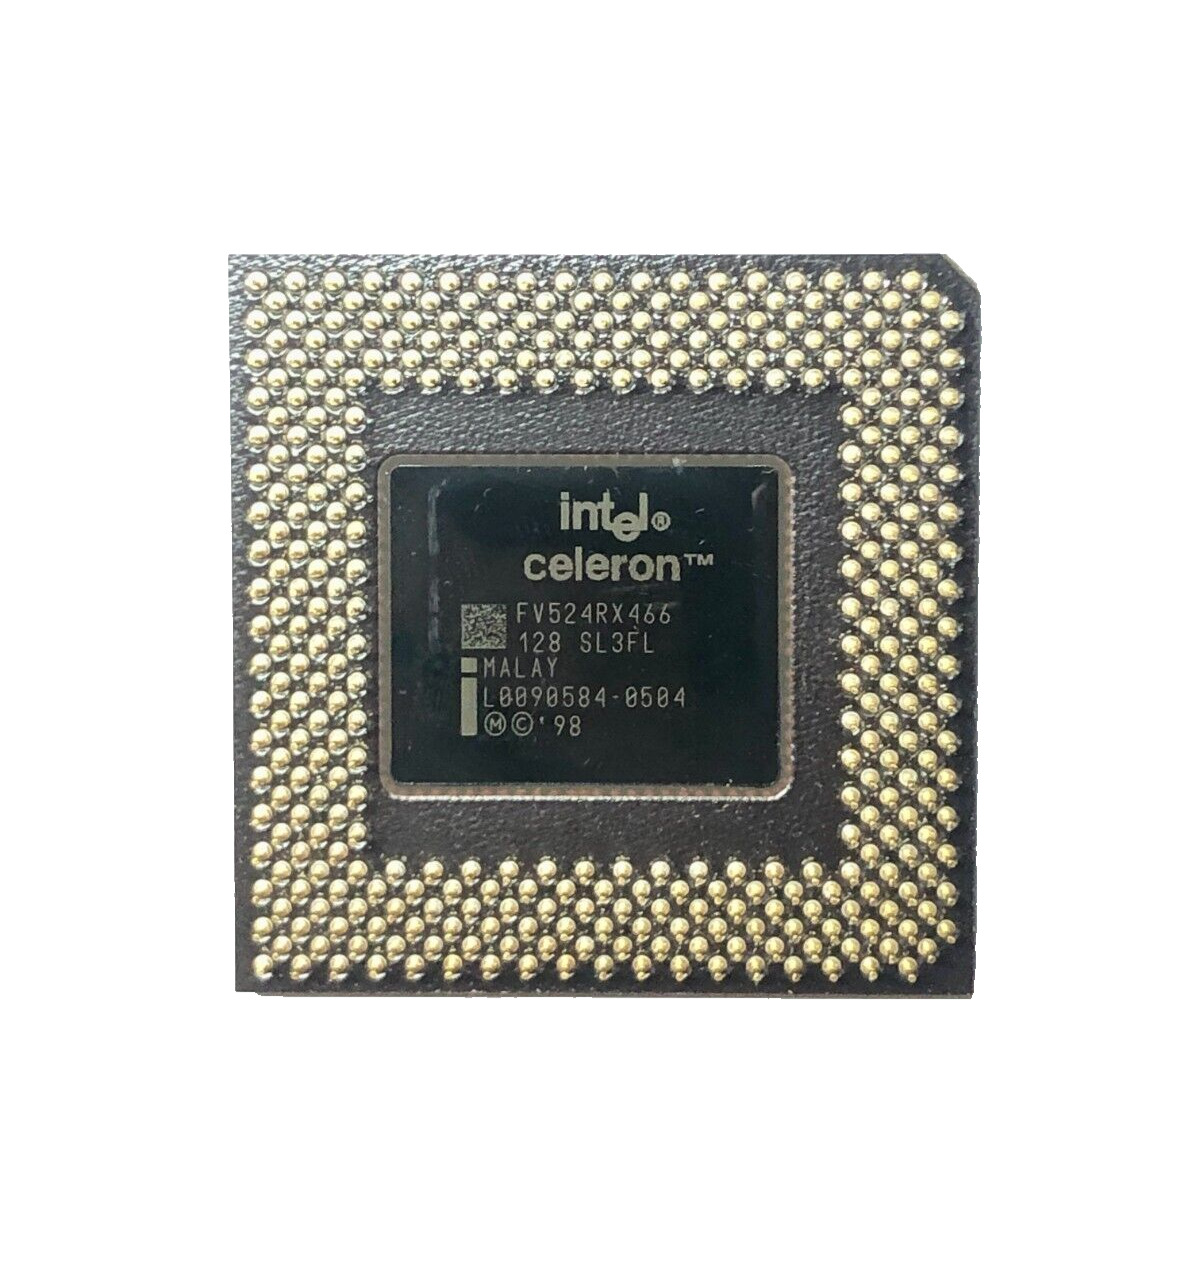 Intel Celeron 466MHz CPU Vintage Processor SL3FL Socket 370 FV524RX466